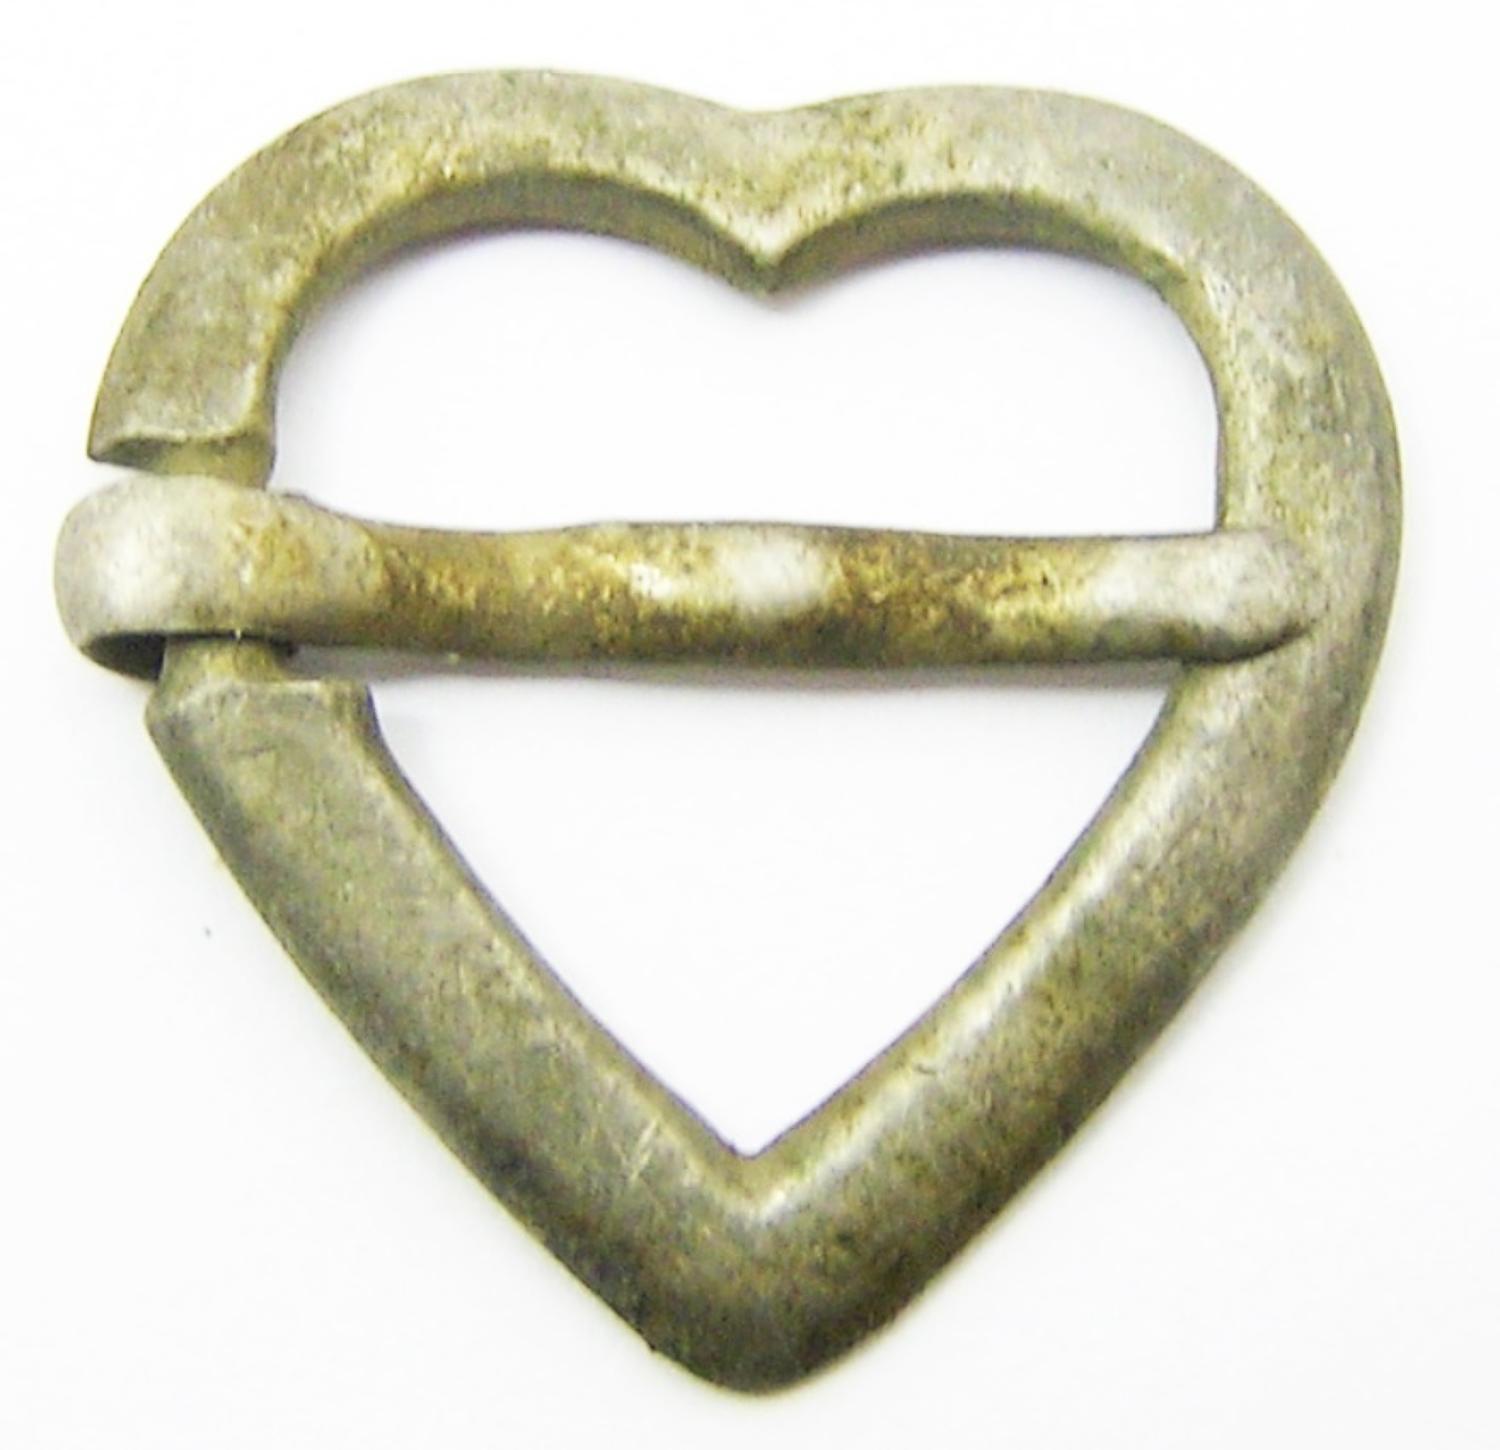 Medieval Silver Heart Shaped Brooch